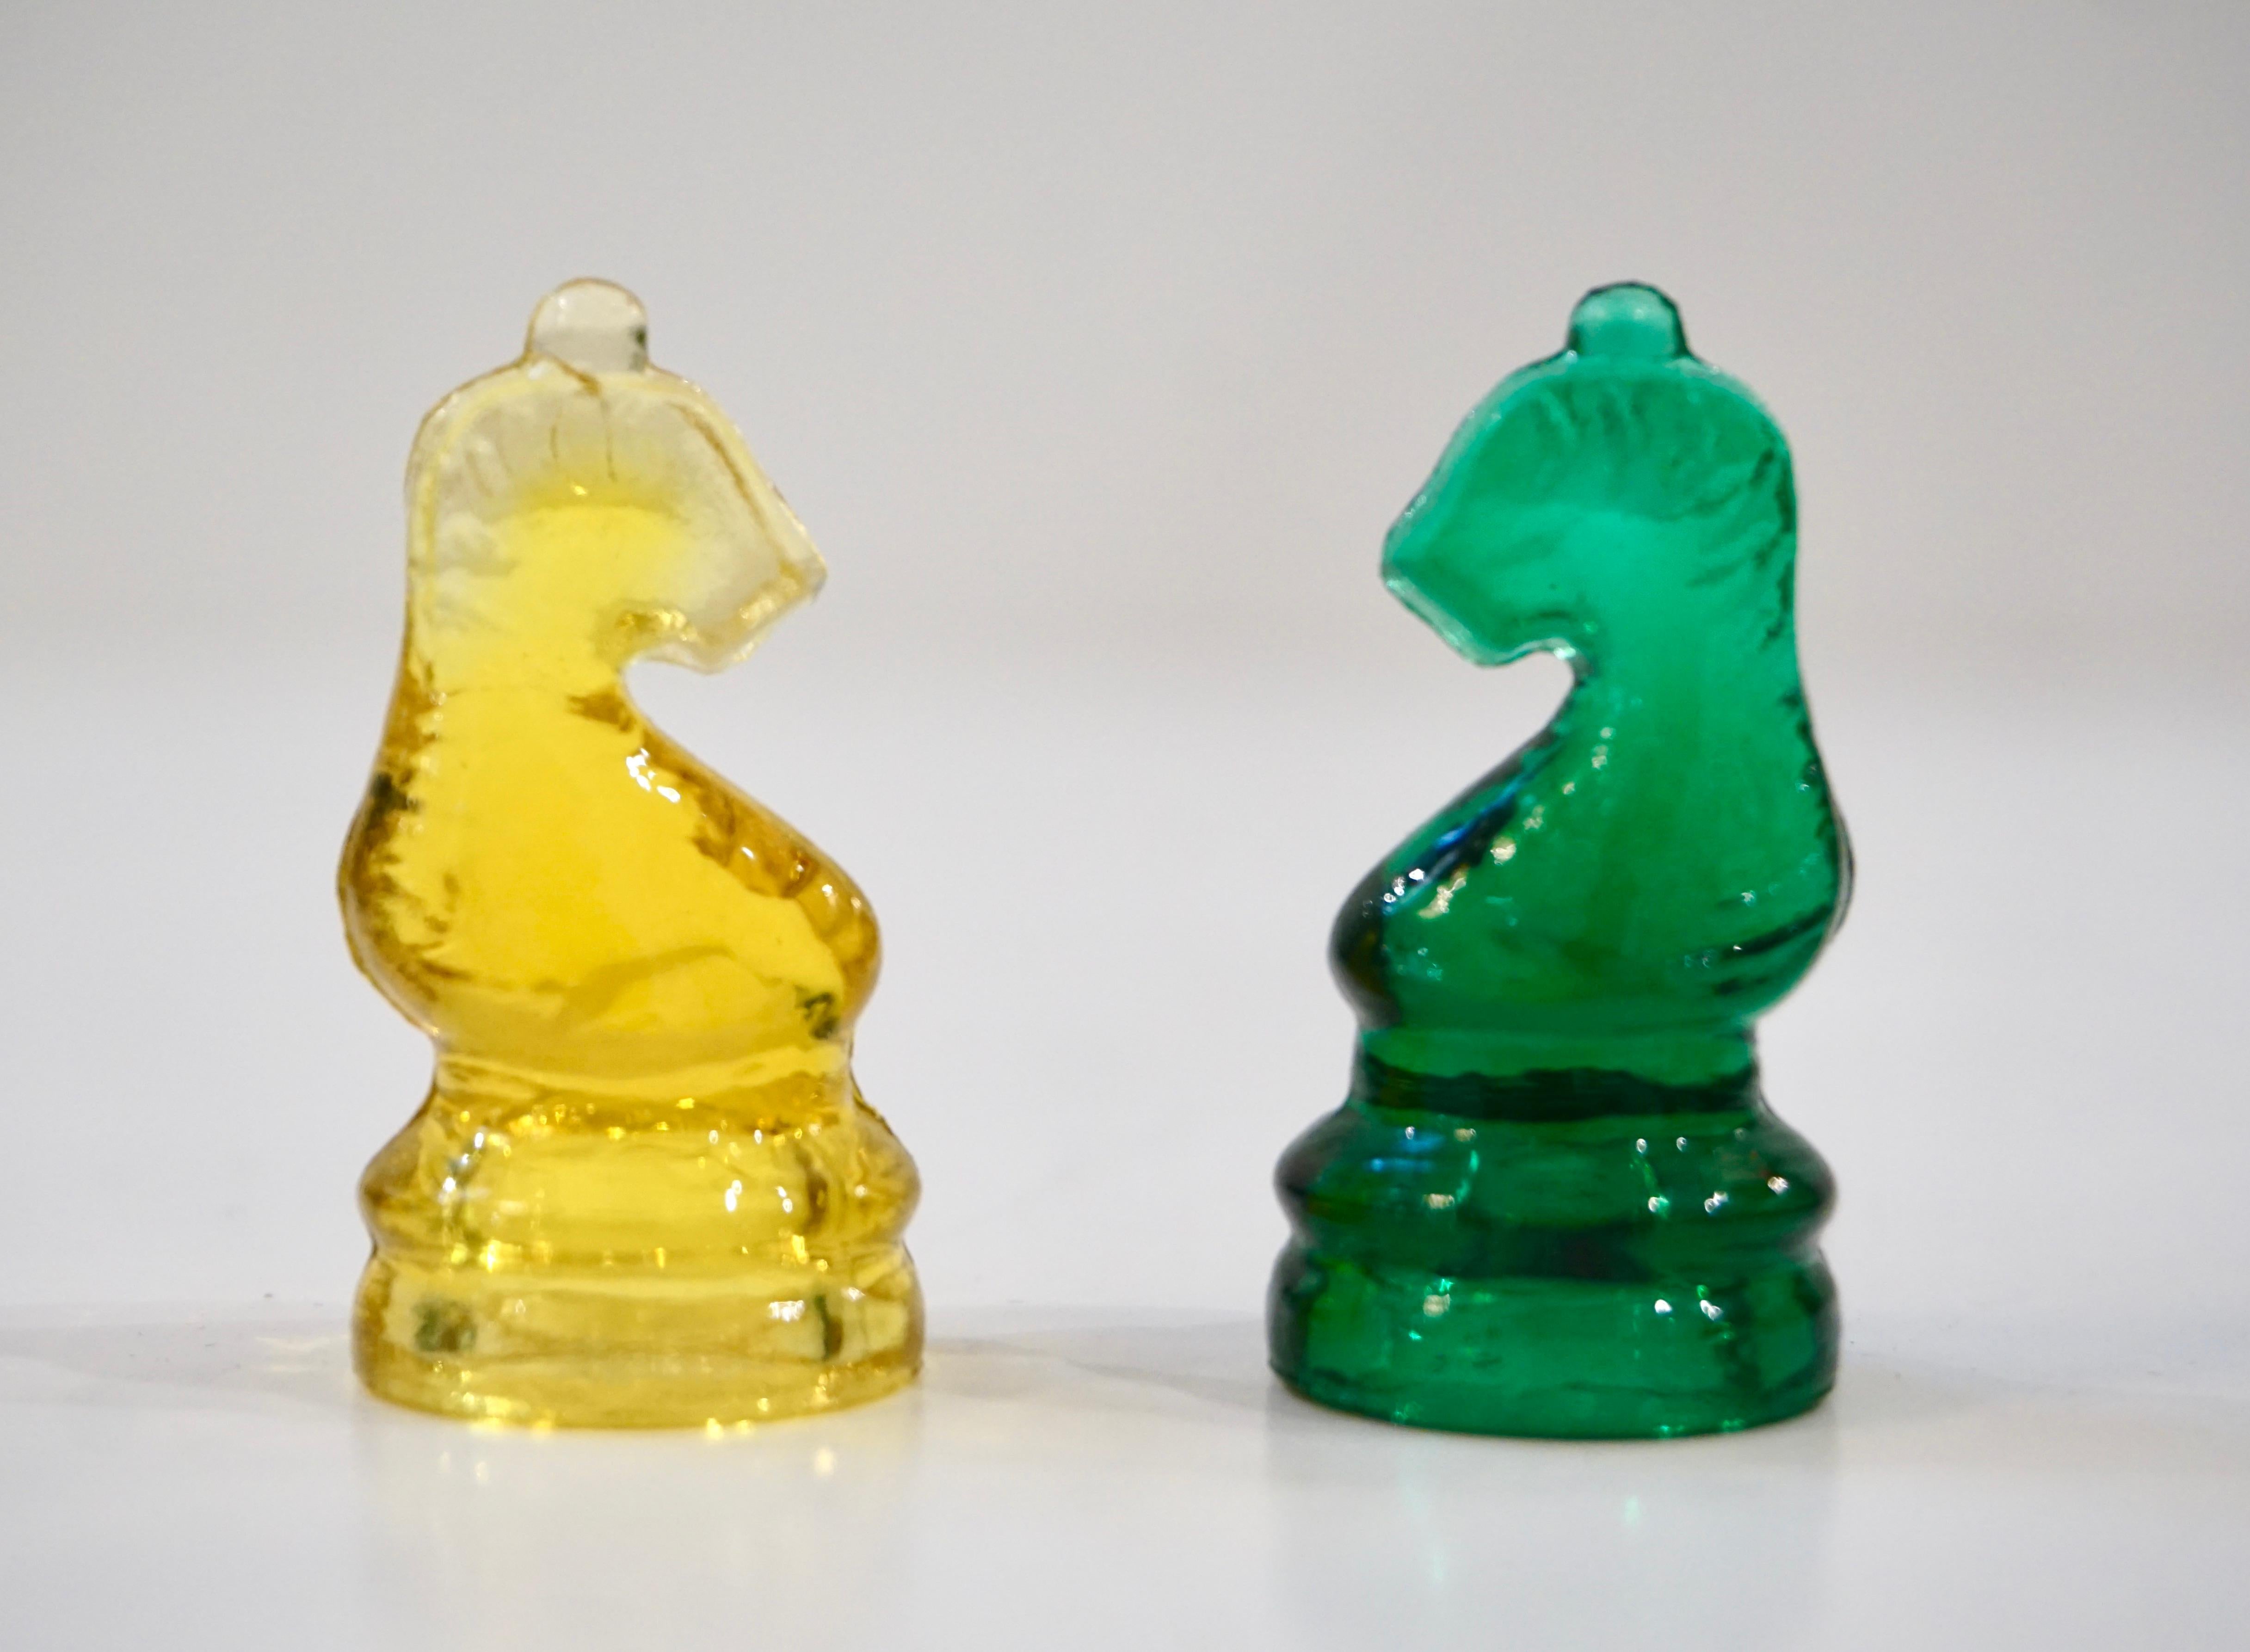 Beveled Contemporary Minimalist Green & Yellow Murano Glass Chess Set on Mirrored Board